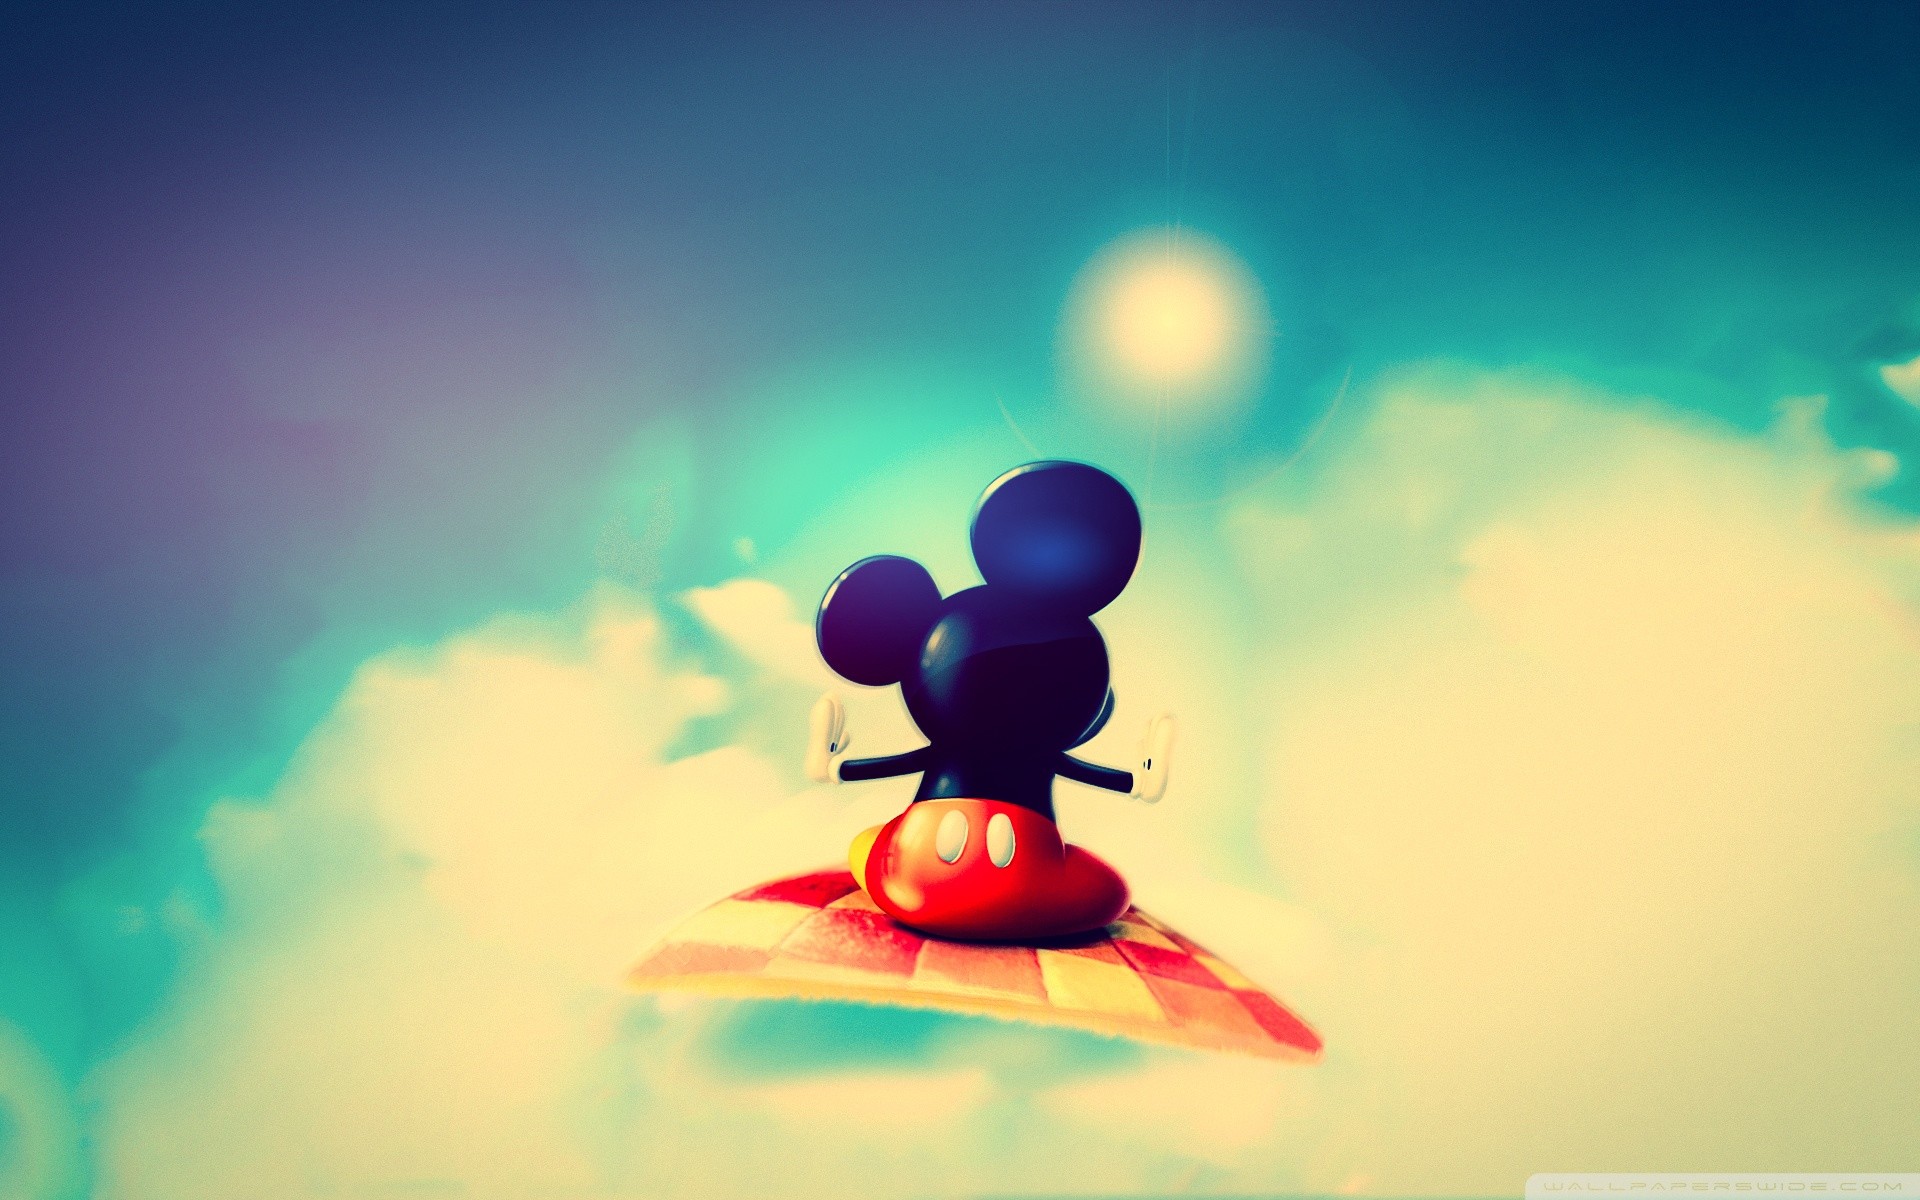 Mickey Mouse Widescreen Wallpaper